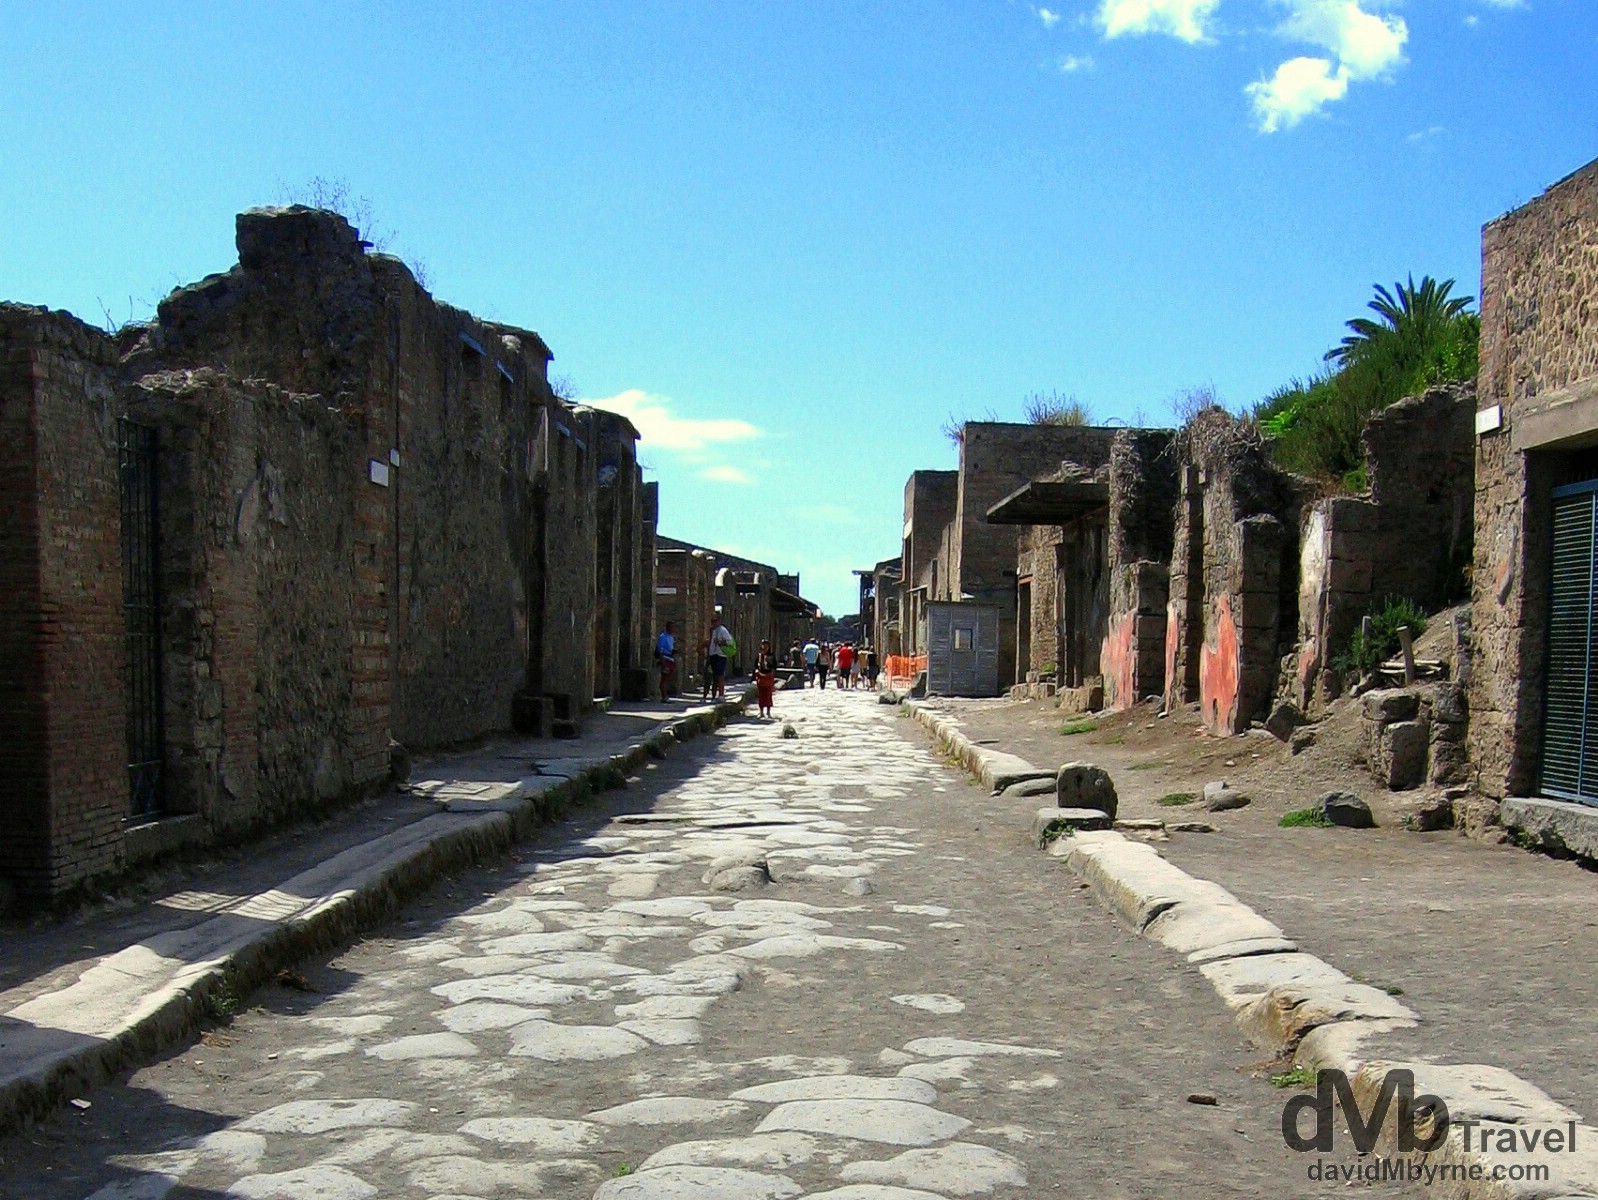 Via dell Abbondanza, one of the main streets in the Roman ruins of Pompeii, Campania, Italy. September 5th, 2007.